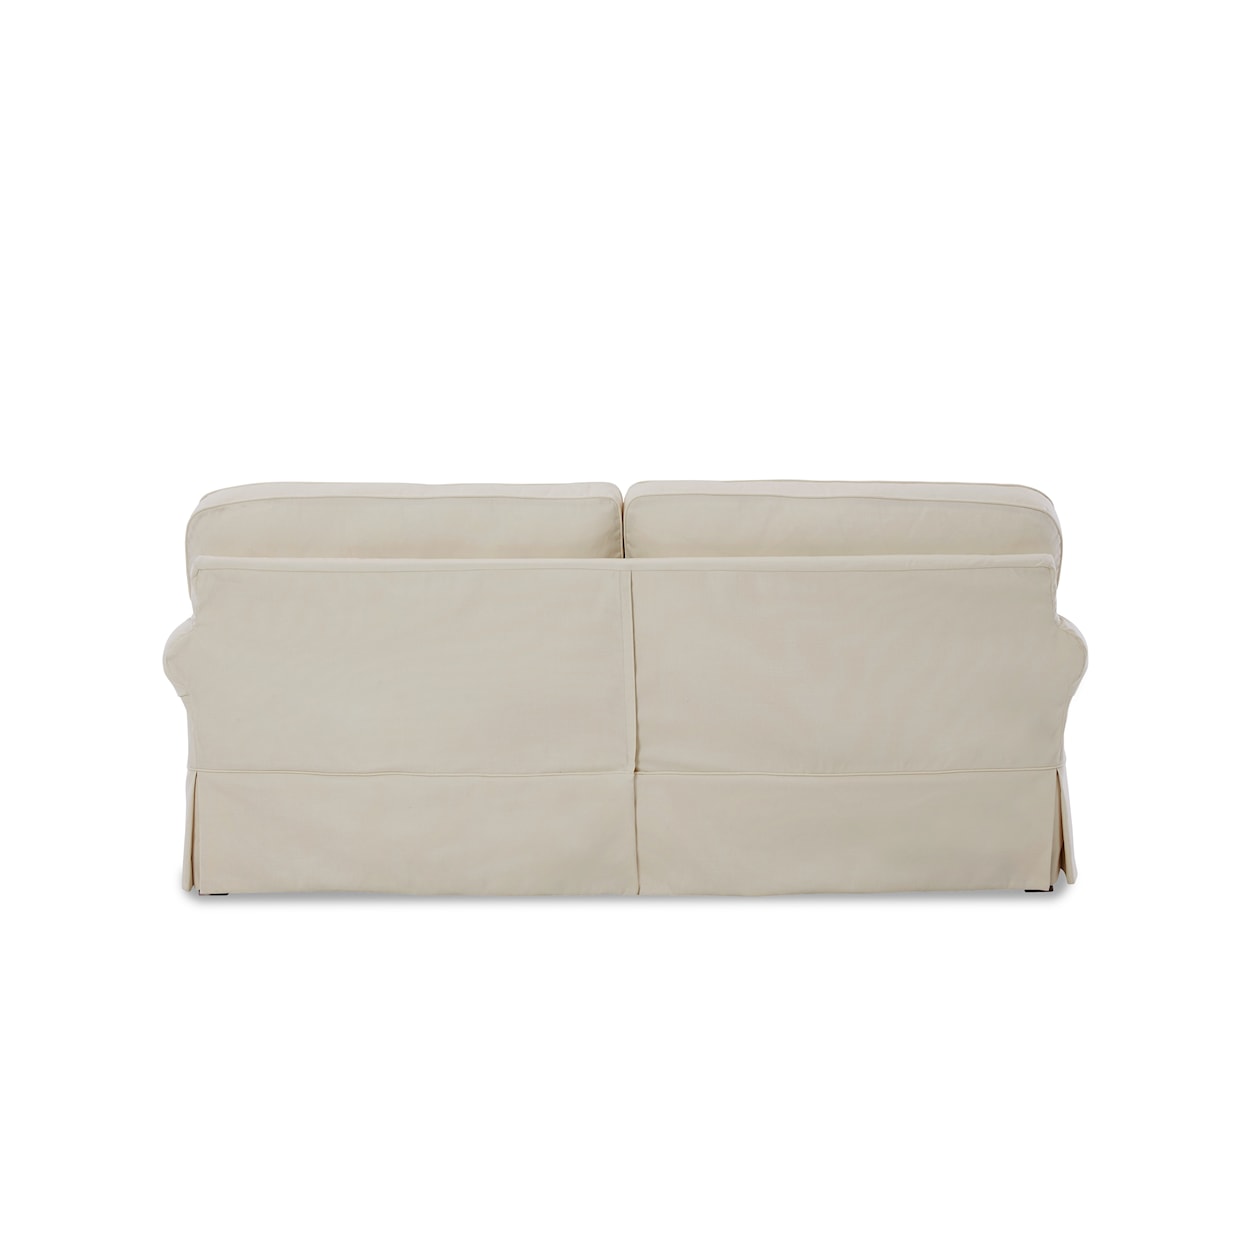 Craftmaster 917450BD Memory Foam Queen Sleeper Sofa (2-Seat)